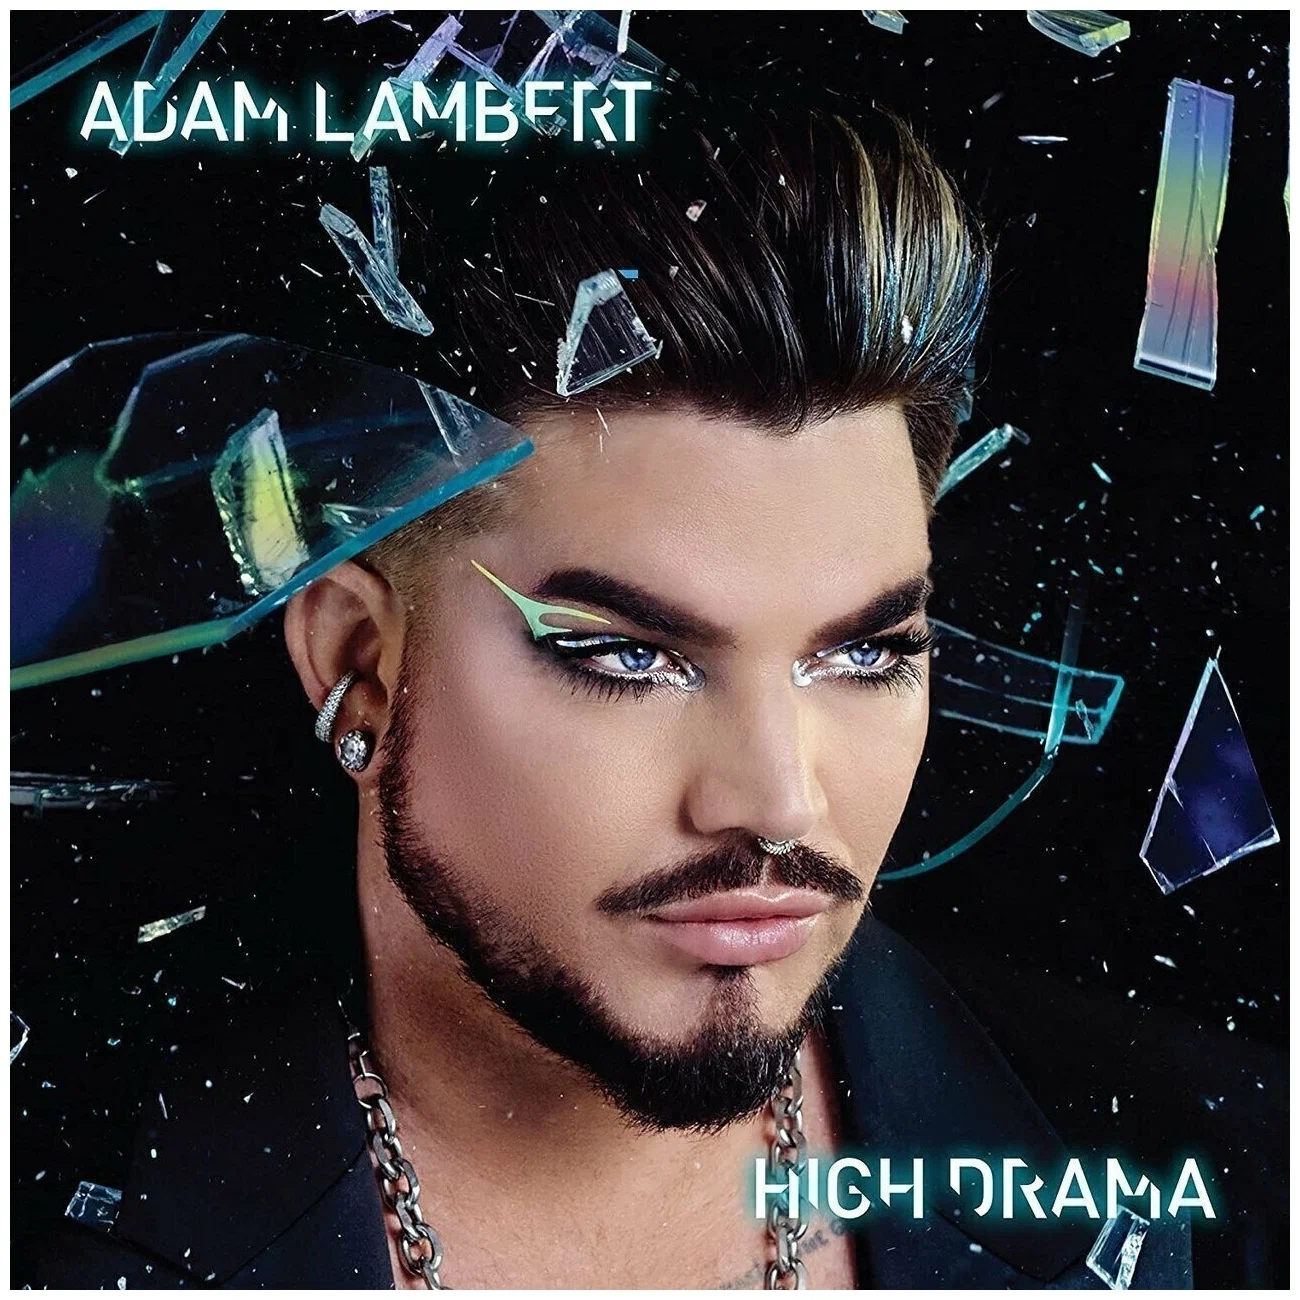 Виниловая Пластинка Lambert, Adam, High Drama (5054197308611) adam lambert high drama lp виниловая пластинка